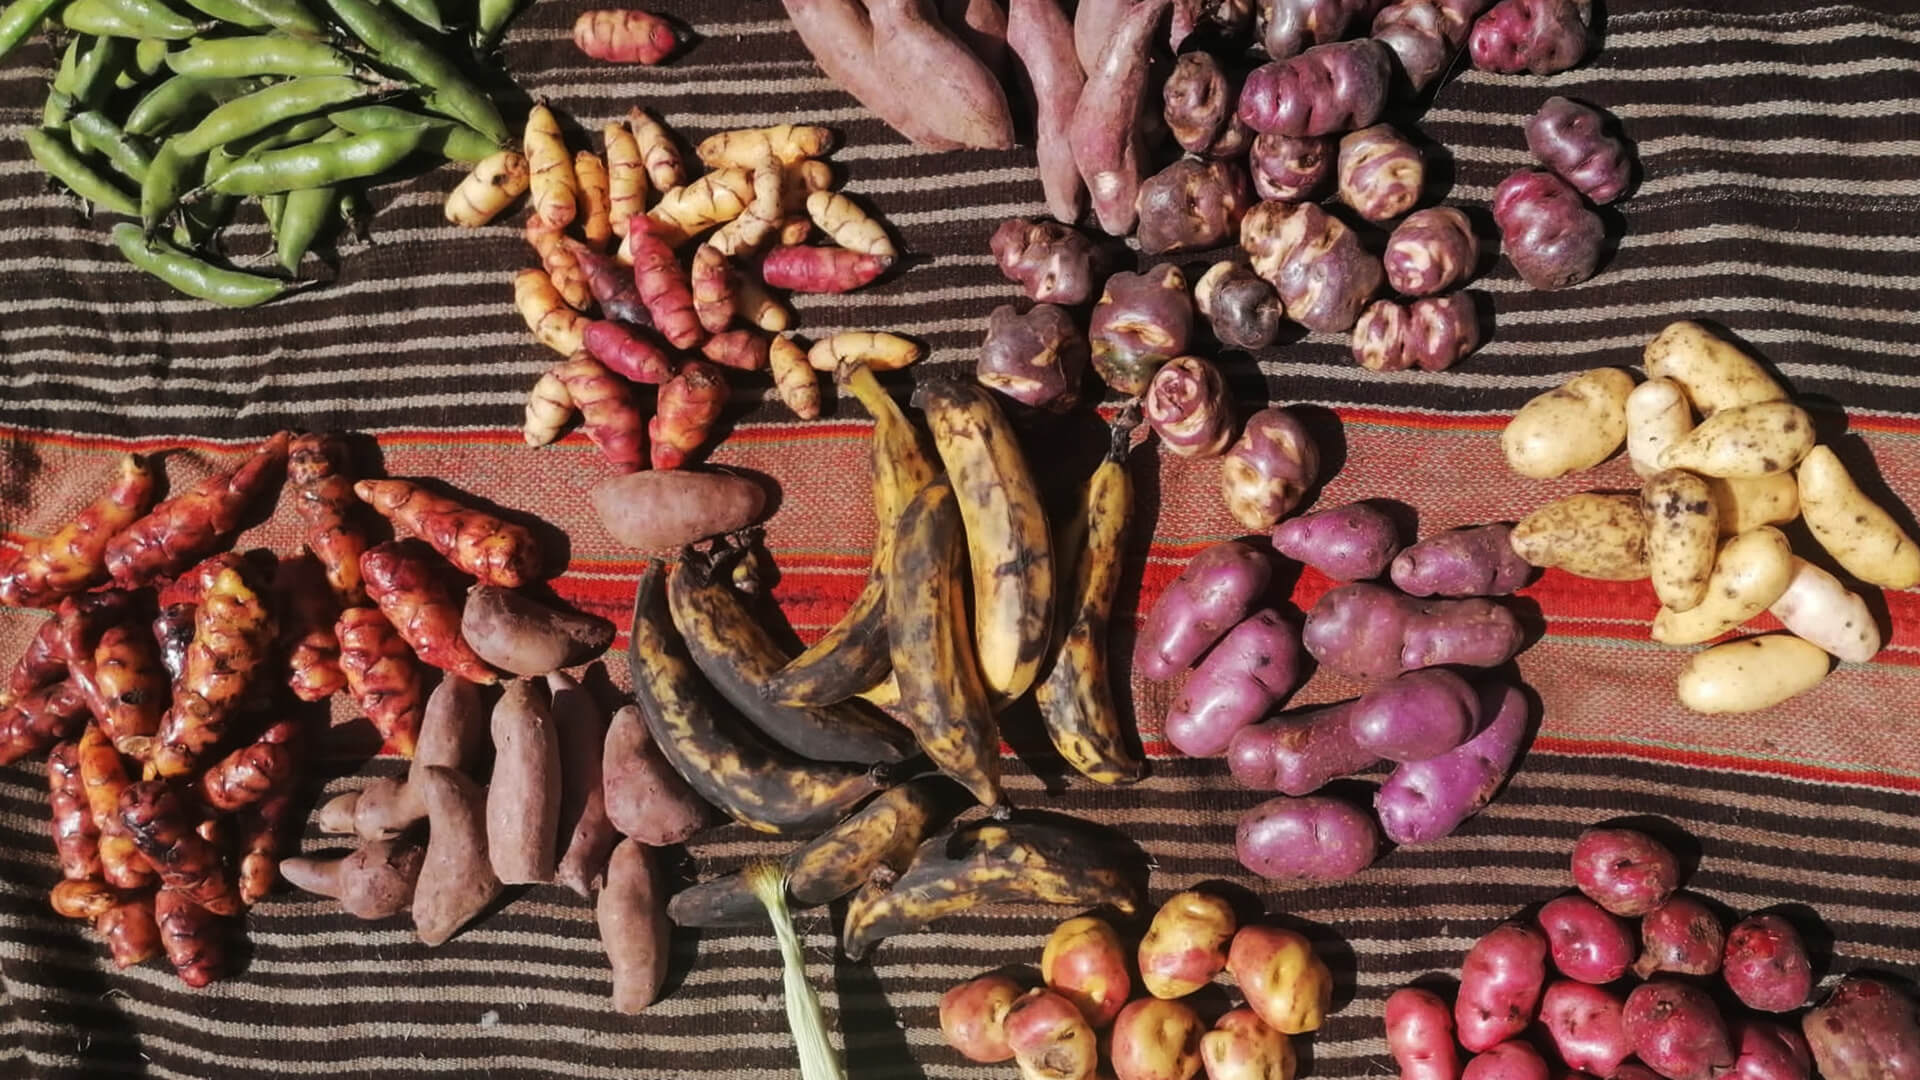 faba beans, sweet potatos, platains, and several types of native potatos